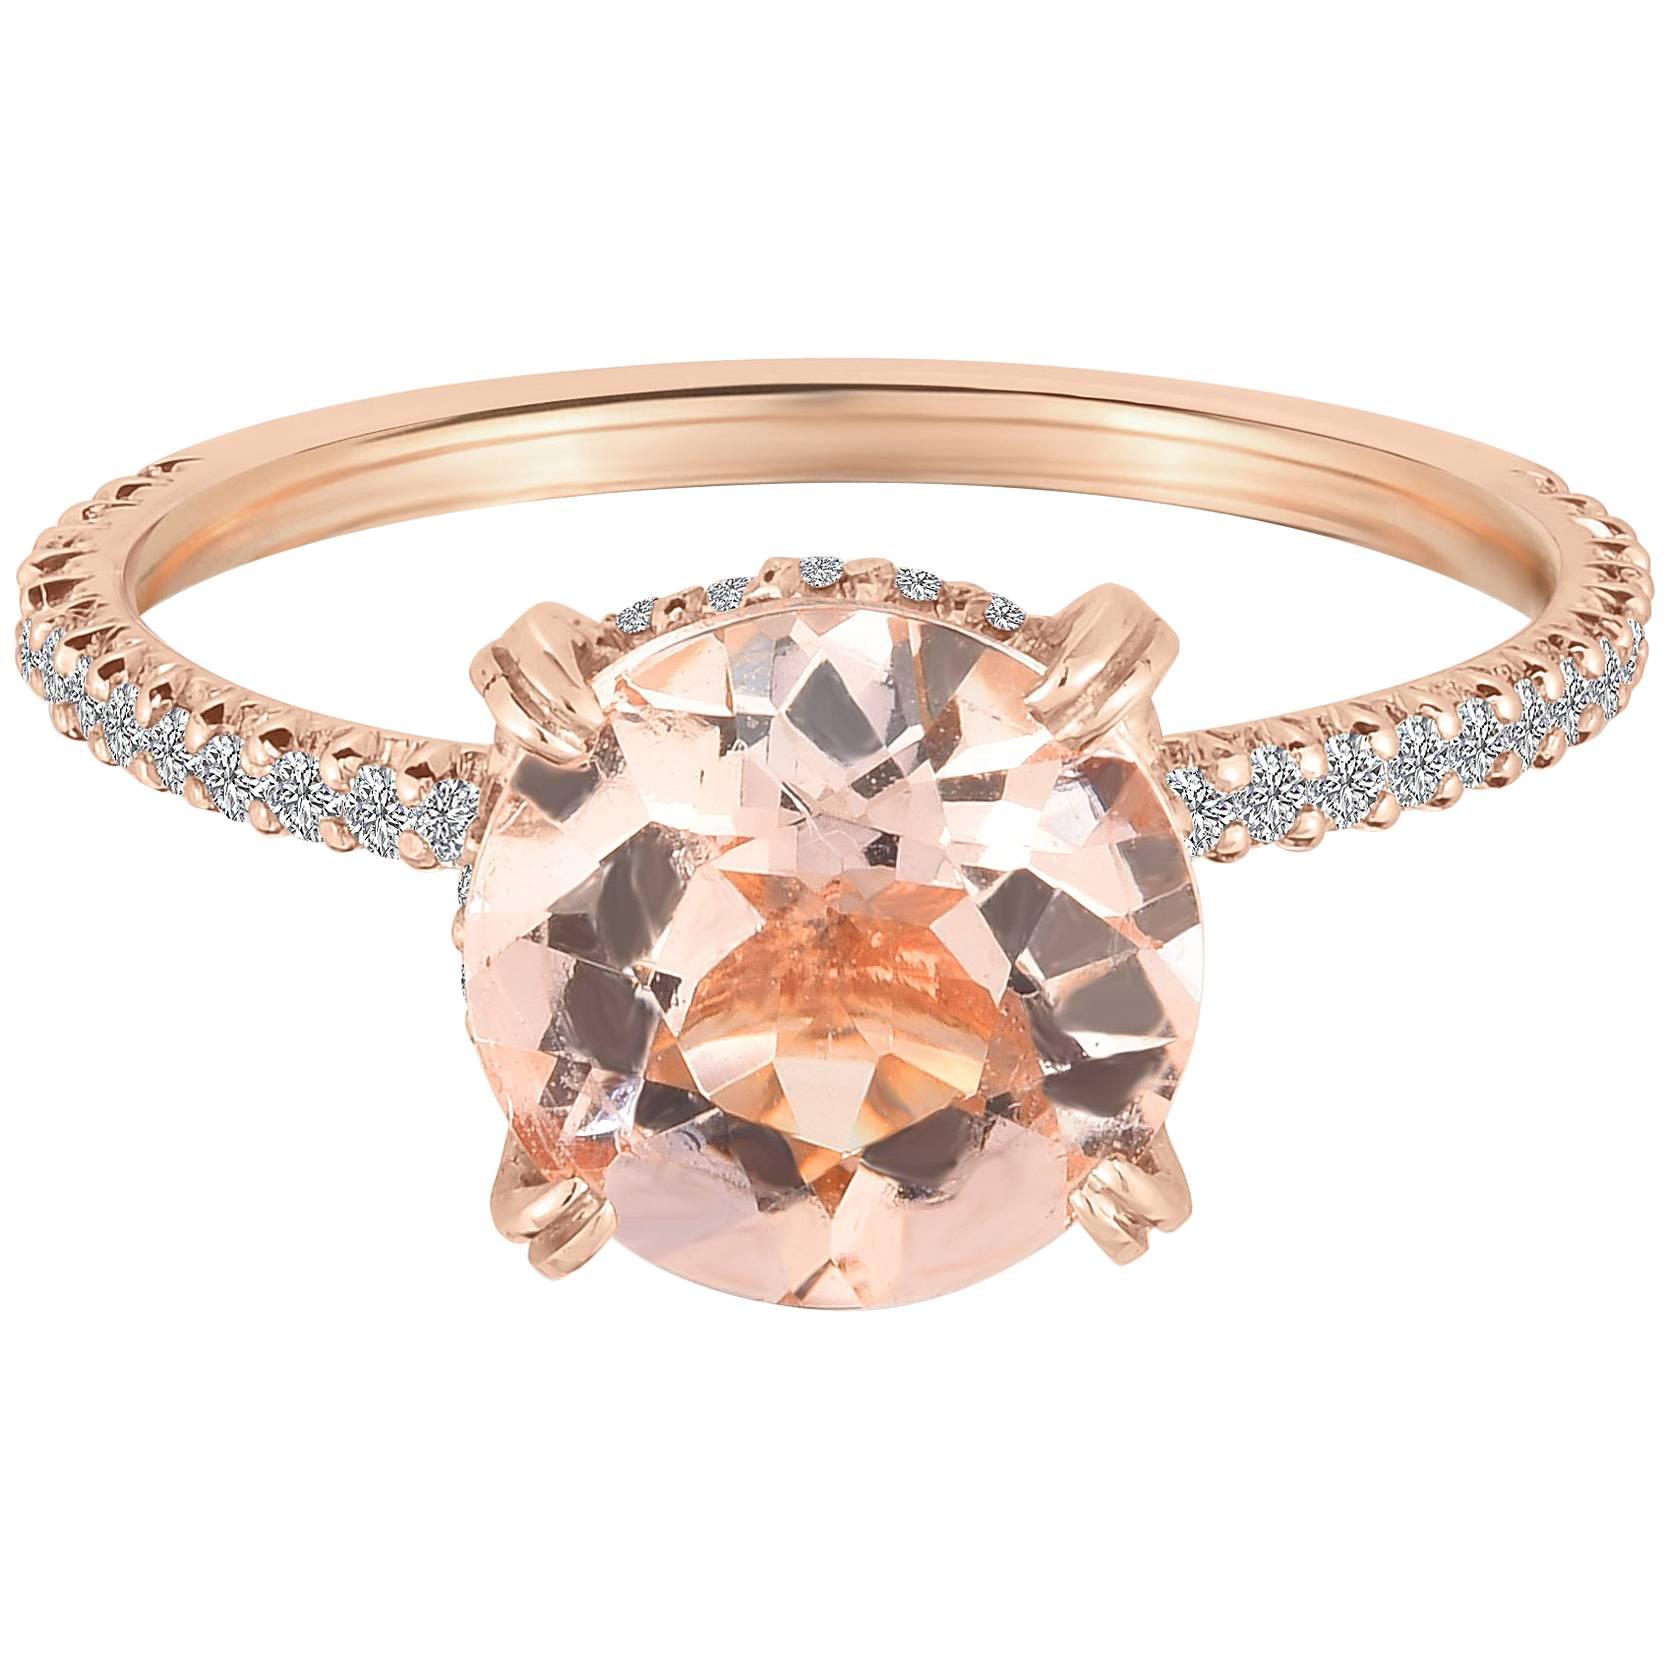 Marisa Perry Two Carat Solitaire Morganite Diamond Engagement Ring in Rose Gold